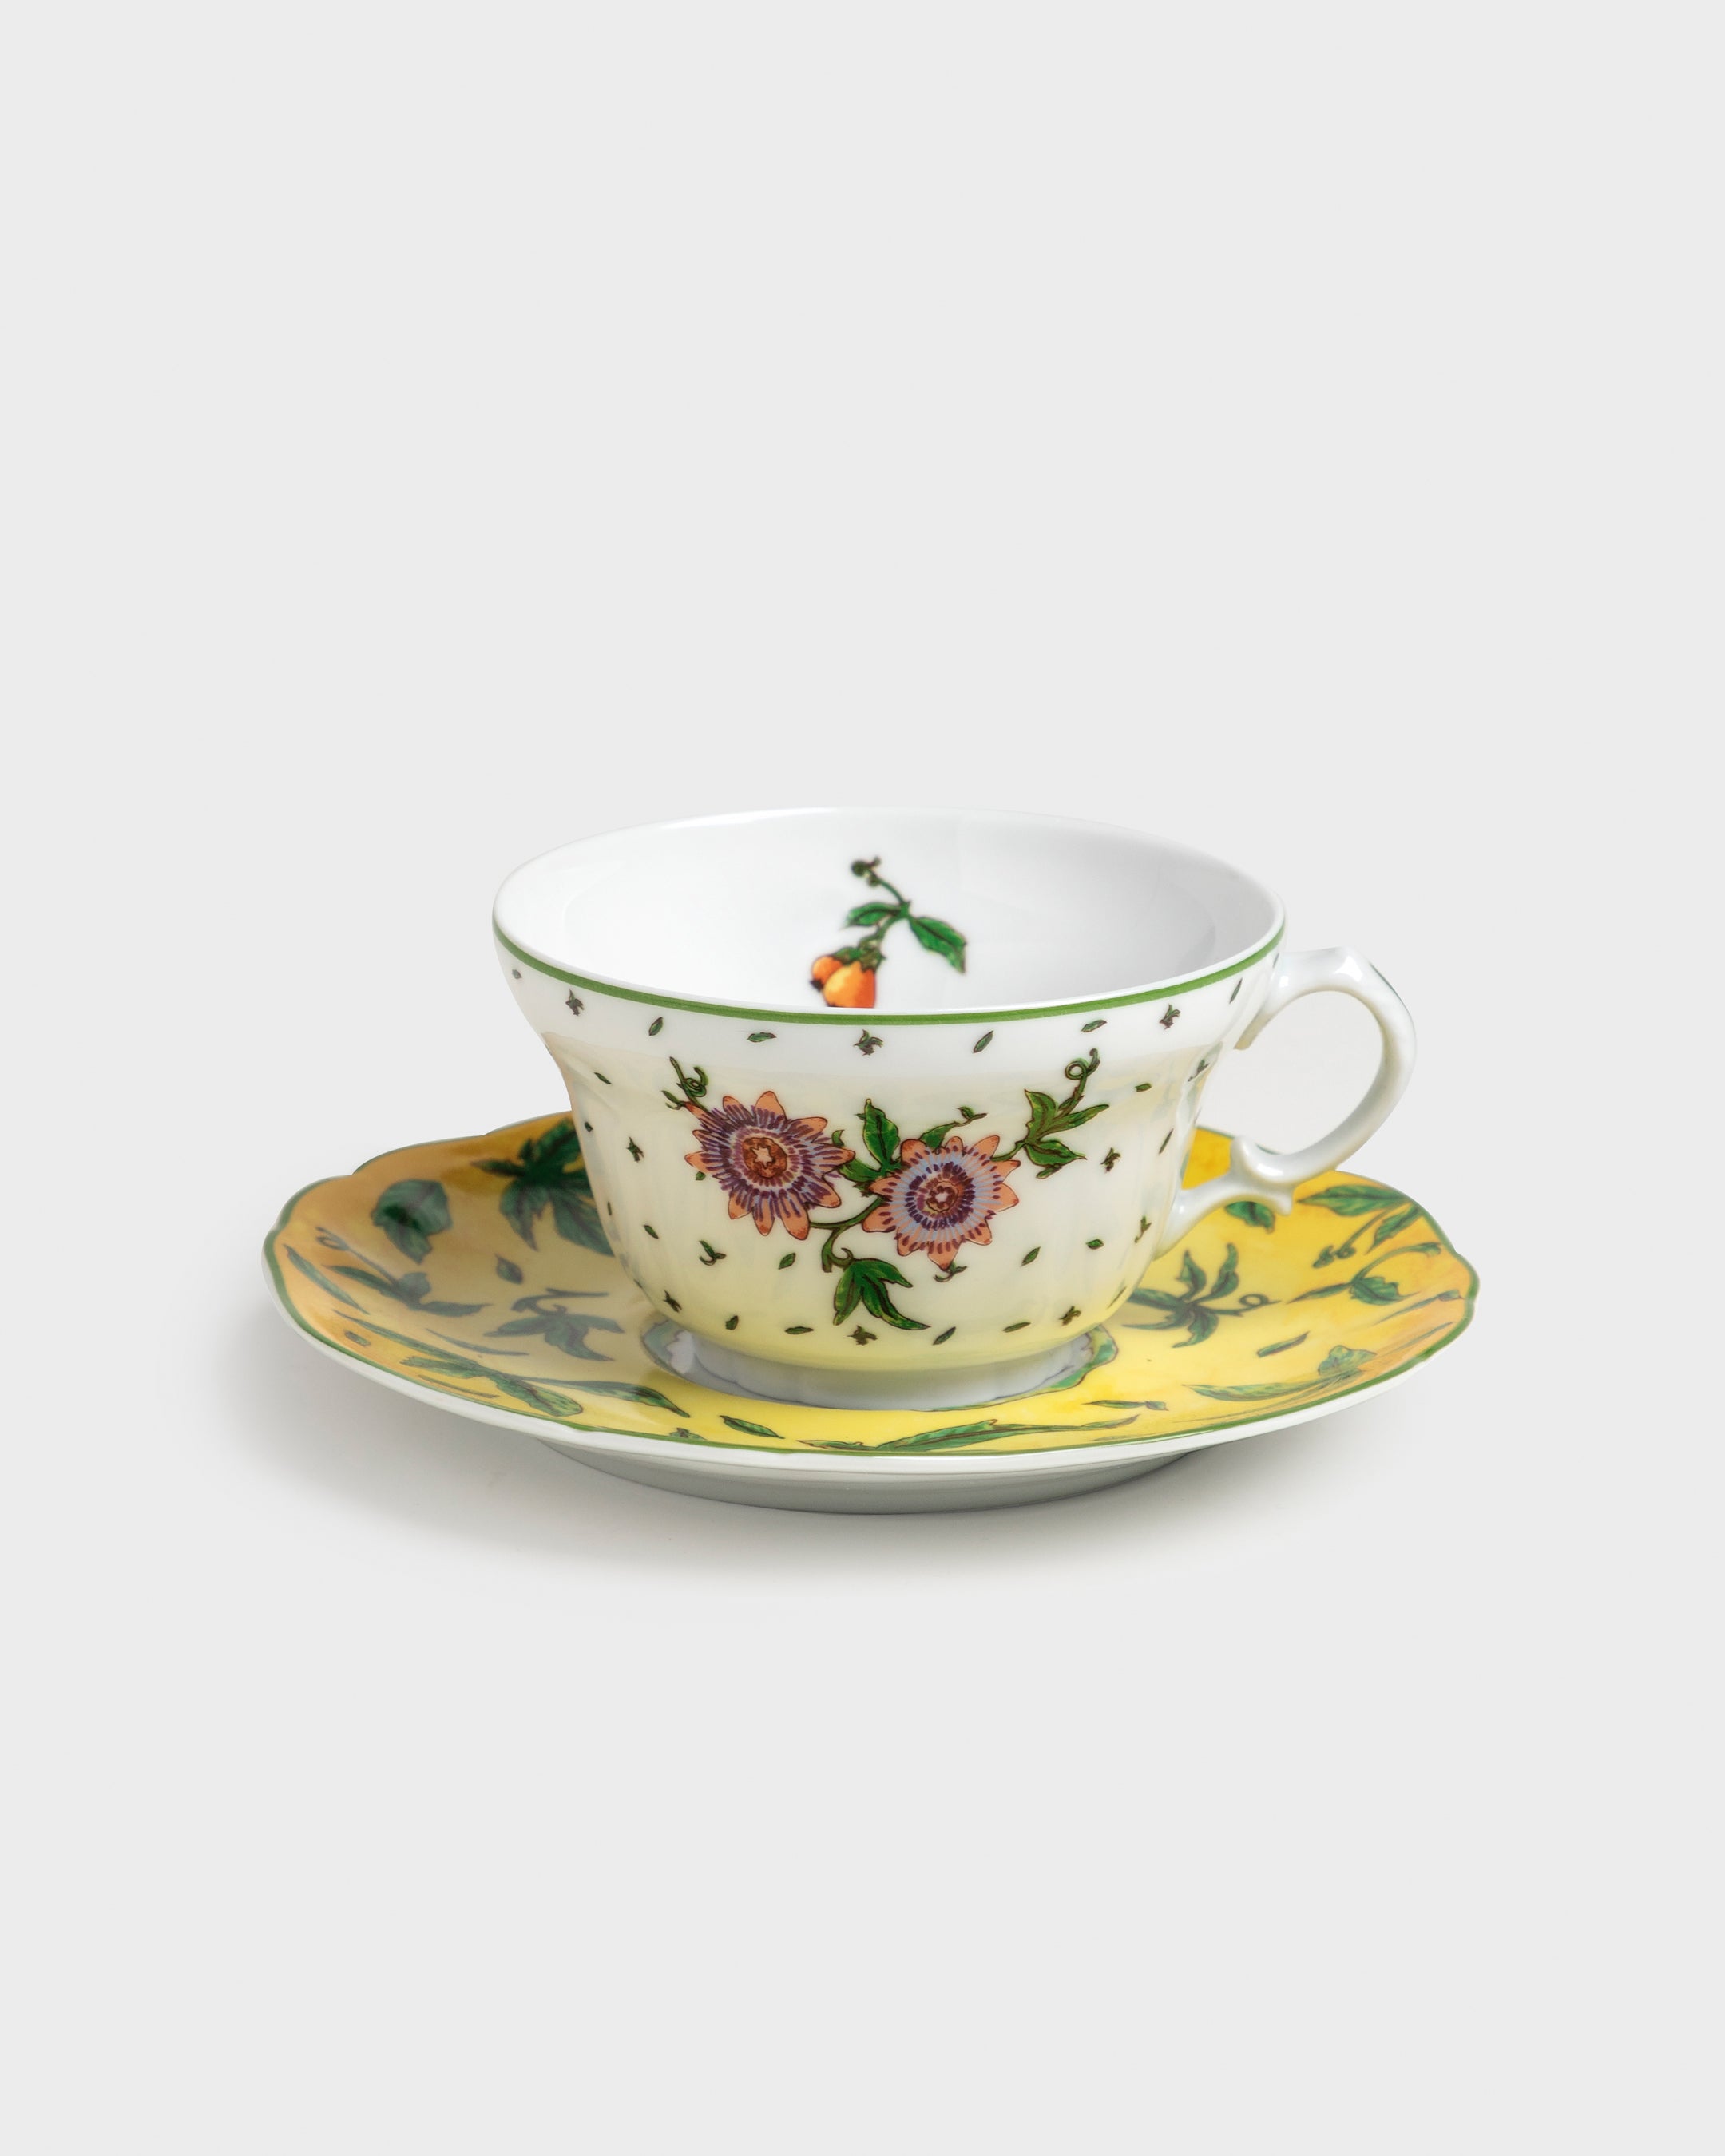 Tea Cup and Saucer Flor de Maracuja - Tania Bulhões